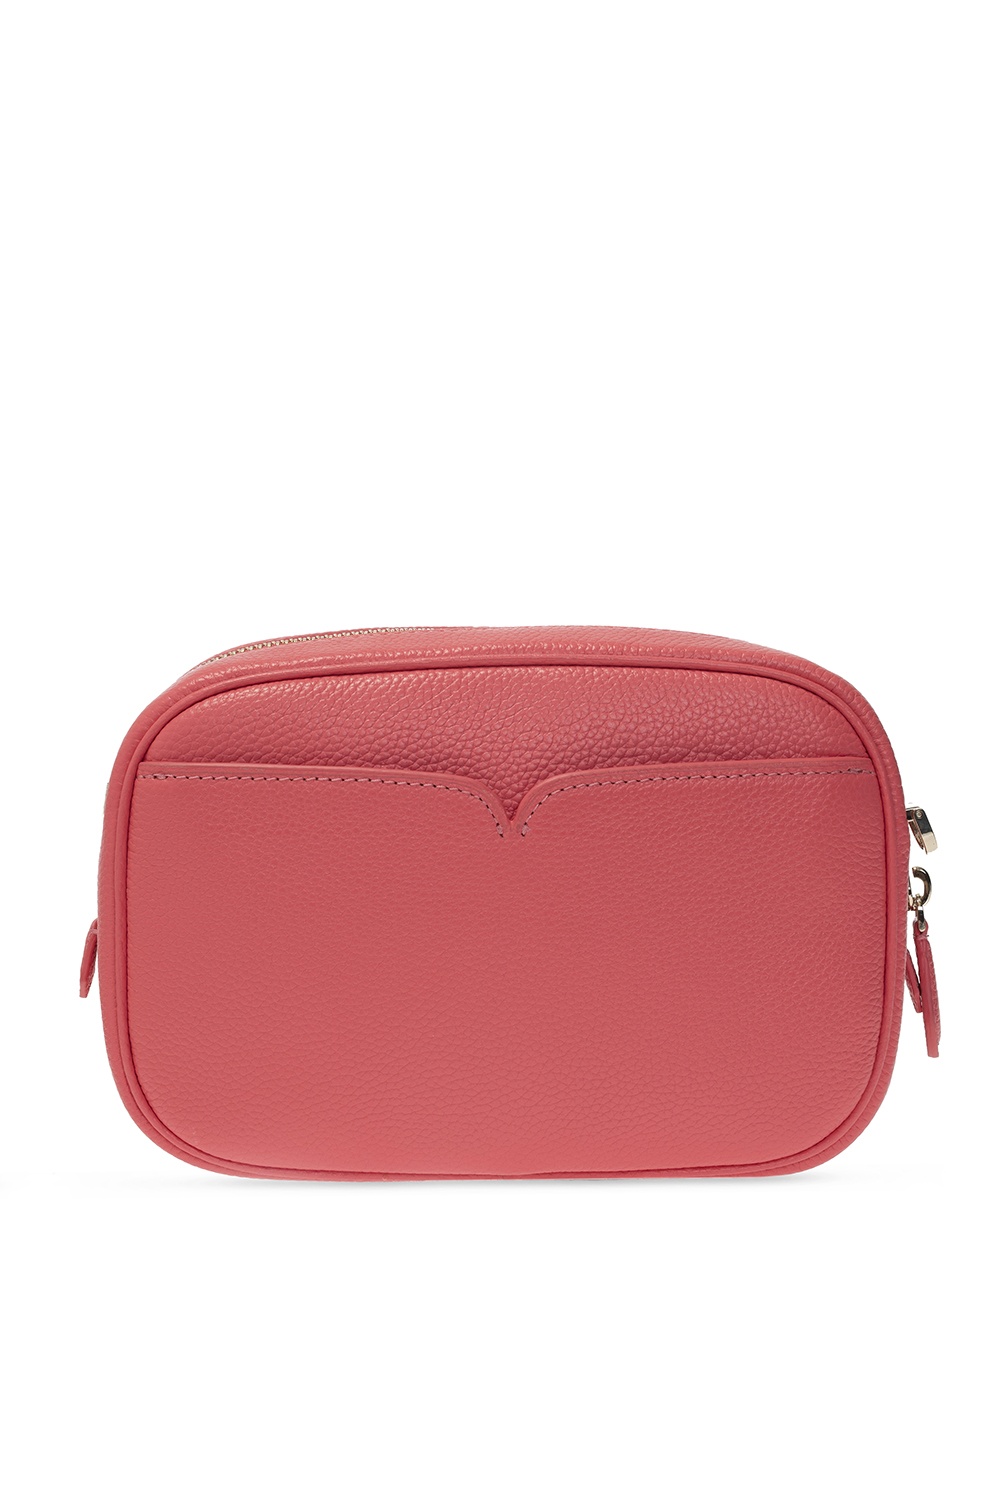 Buy Kate Spade Pink Astrid Medium Cross Body Bag for Women Online